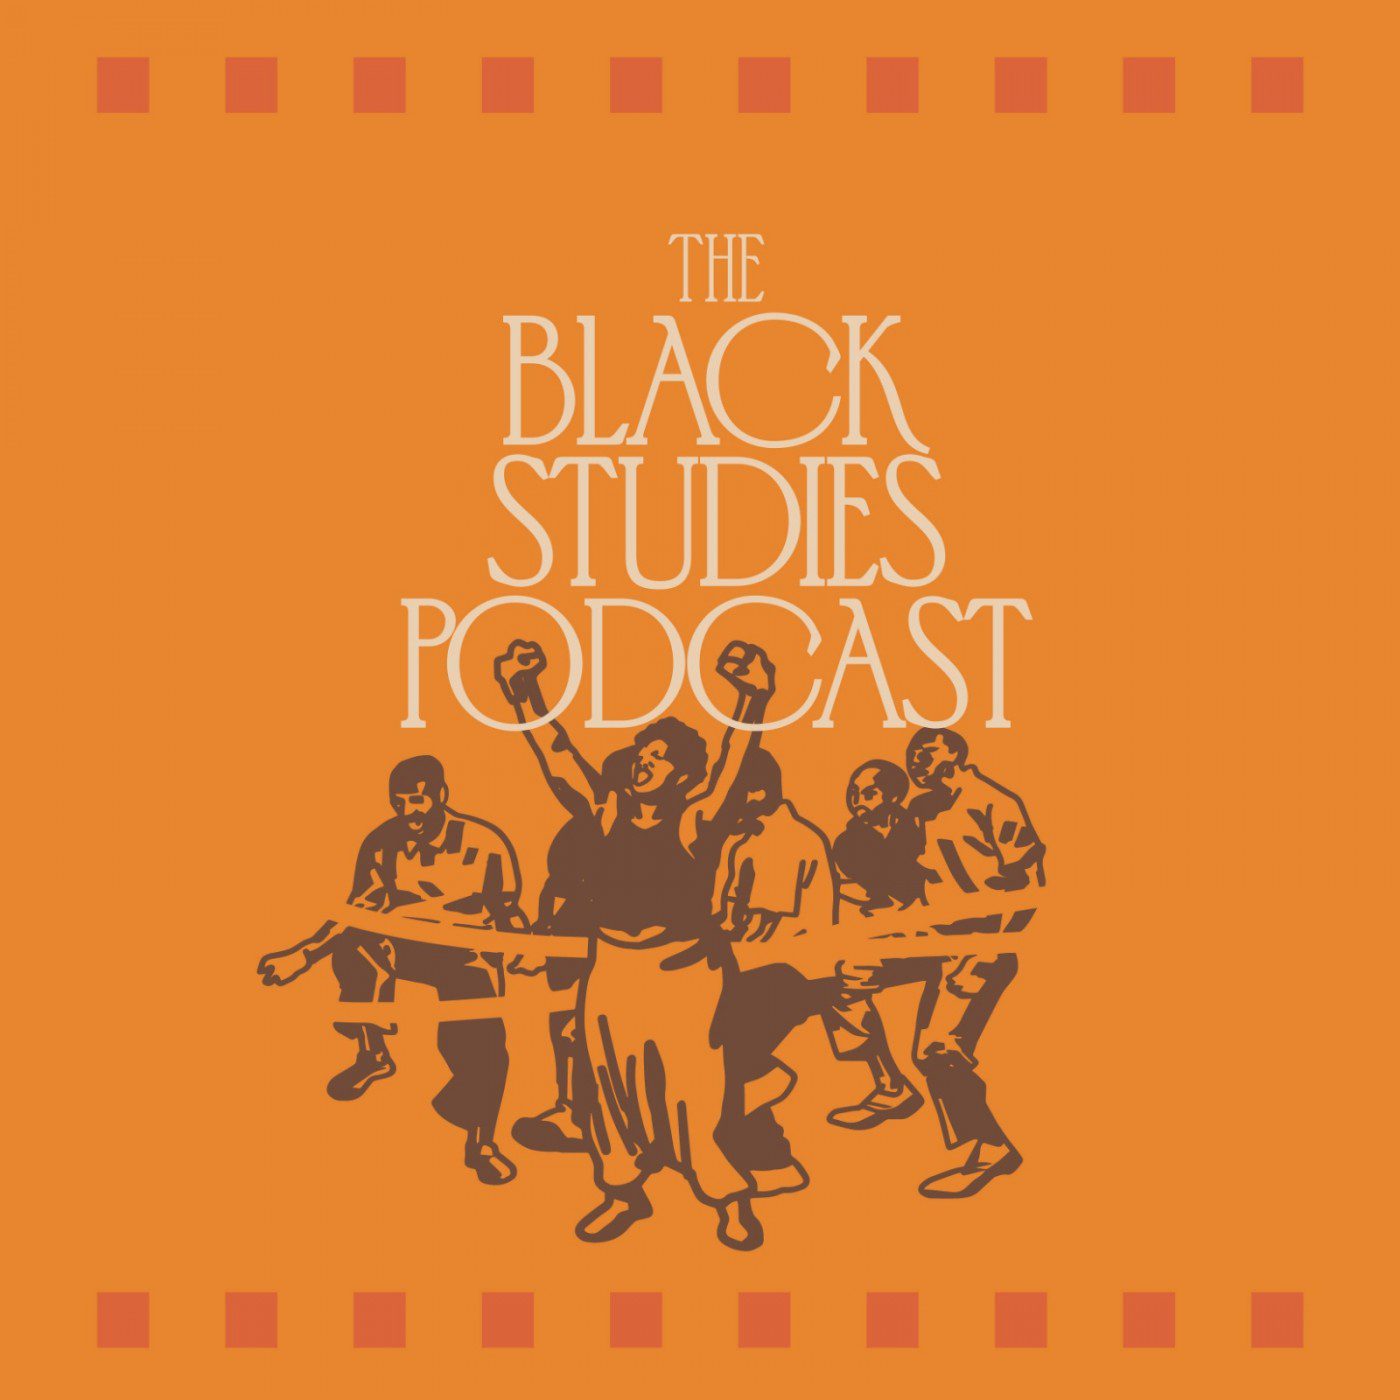 The Black Studies Podcast